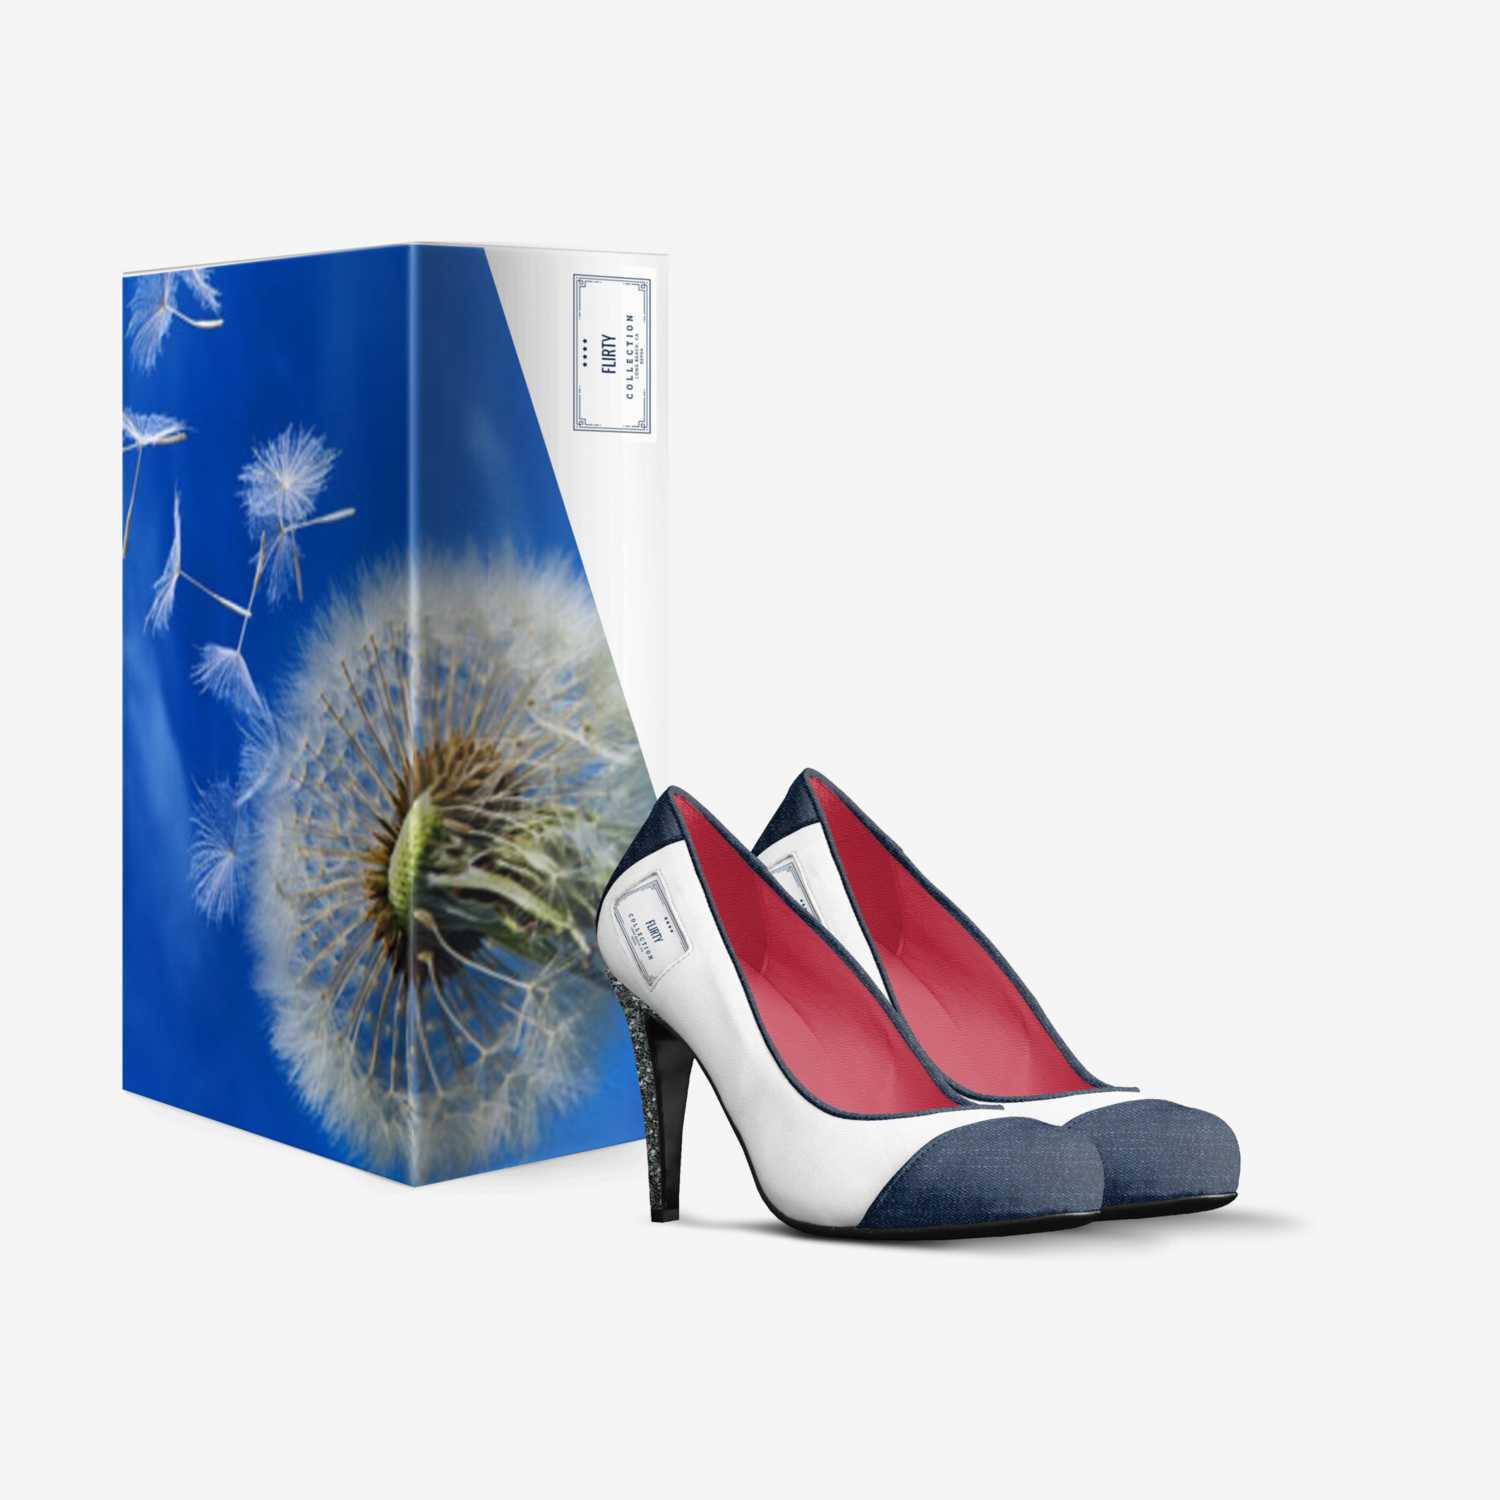 Flirty custom made in Italy shoes by Moffatt Gordon | Box view